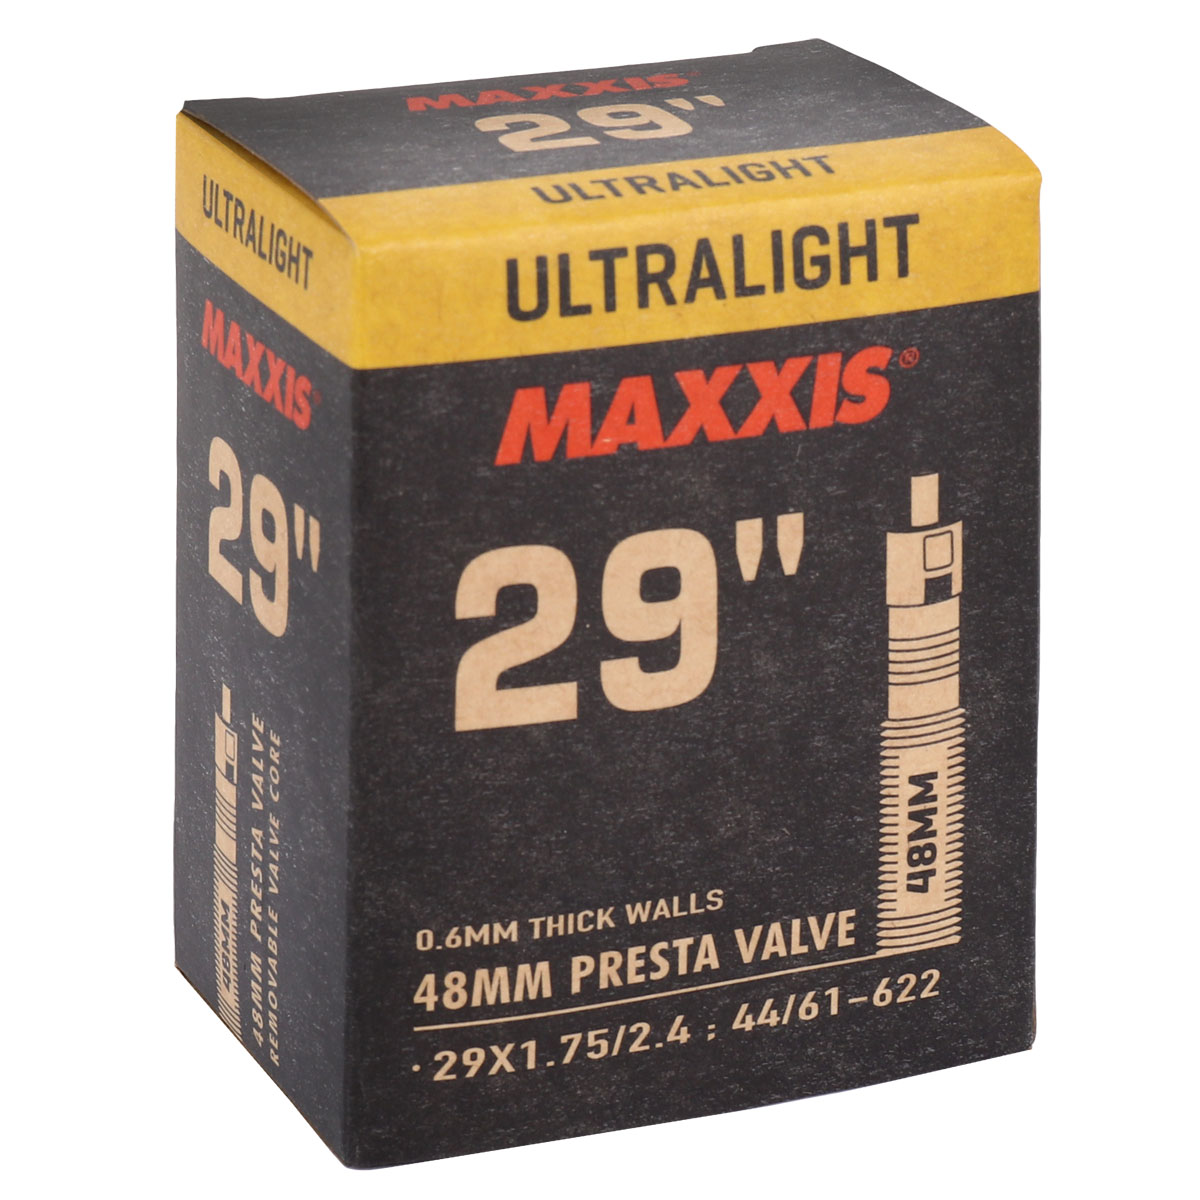 Image of Maxxis UltraLight MTB Tube - 29x1.75-2.40 inches - Presta - 48mm